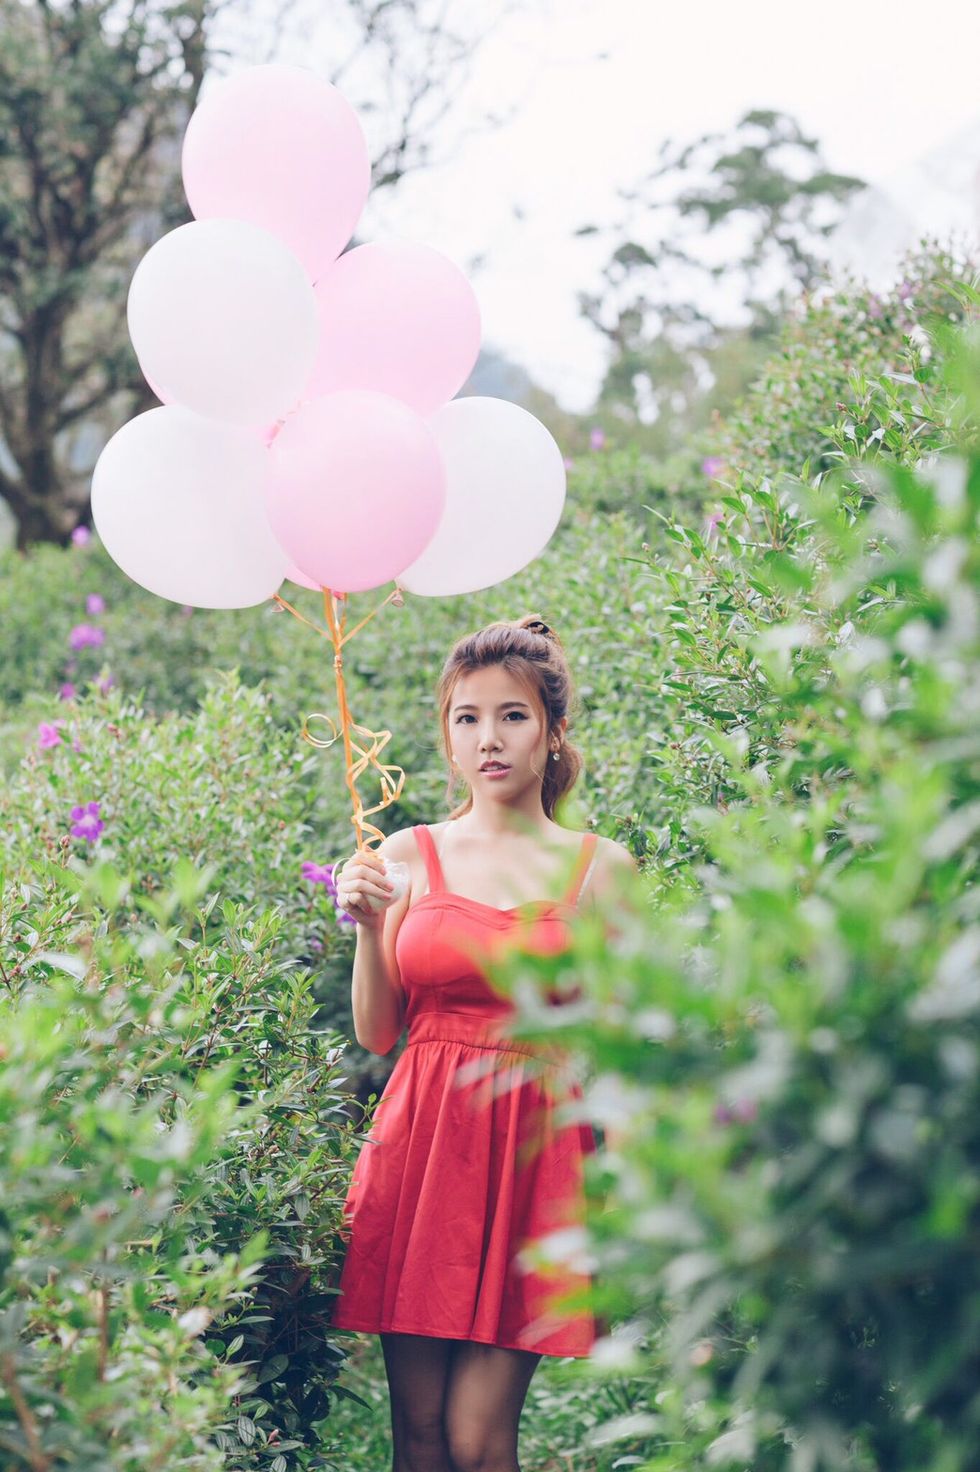 Balloon, Dress, Pink, Summer, Party supply, Shrub, Day dress, Spring, One-piece garment, Waist, 